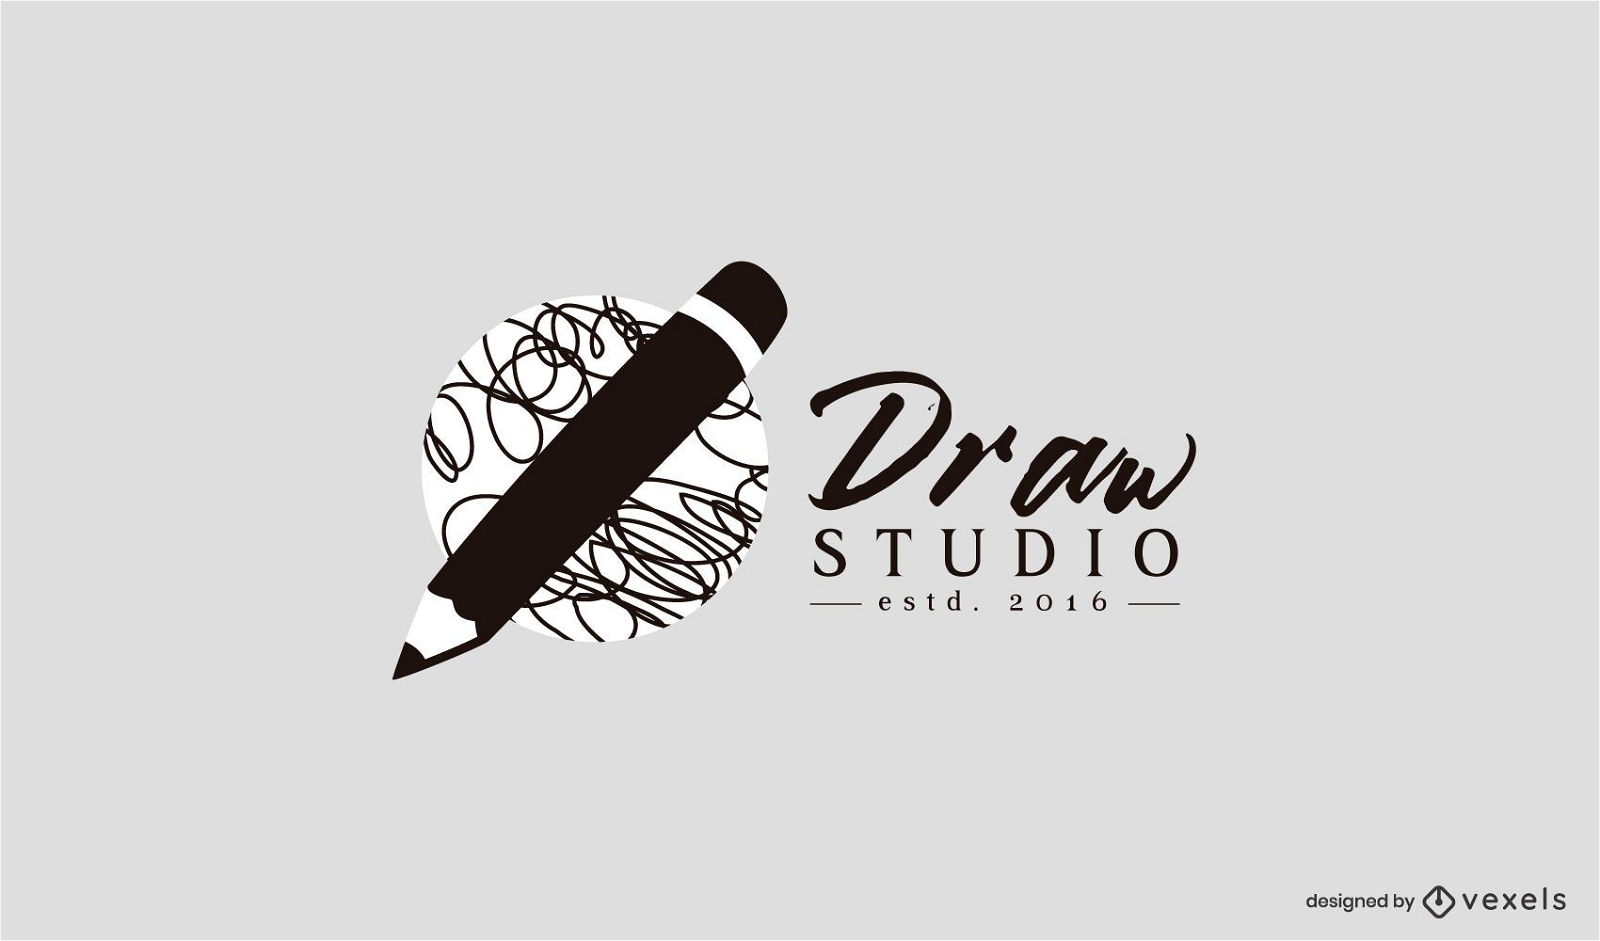 The Art Studio by NM